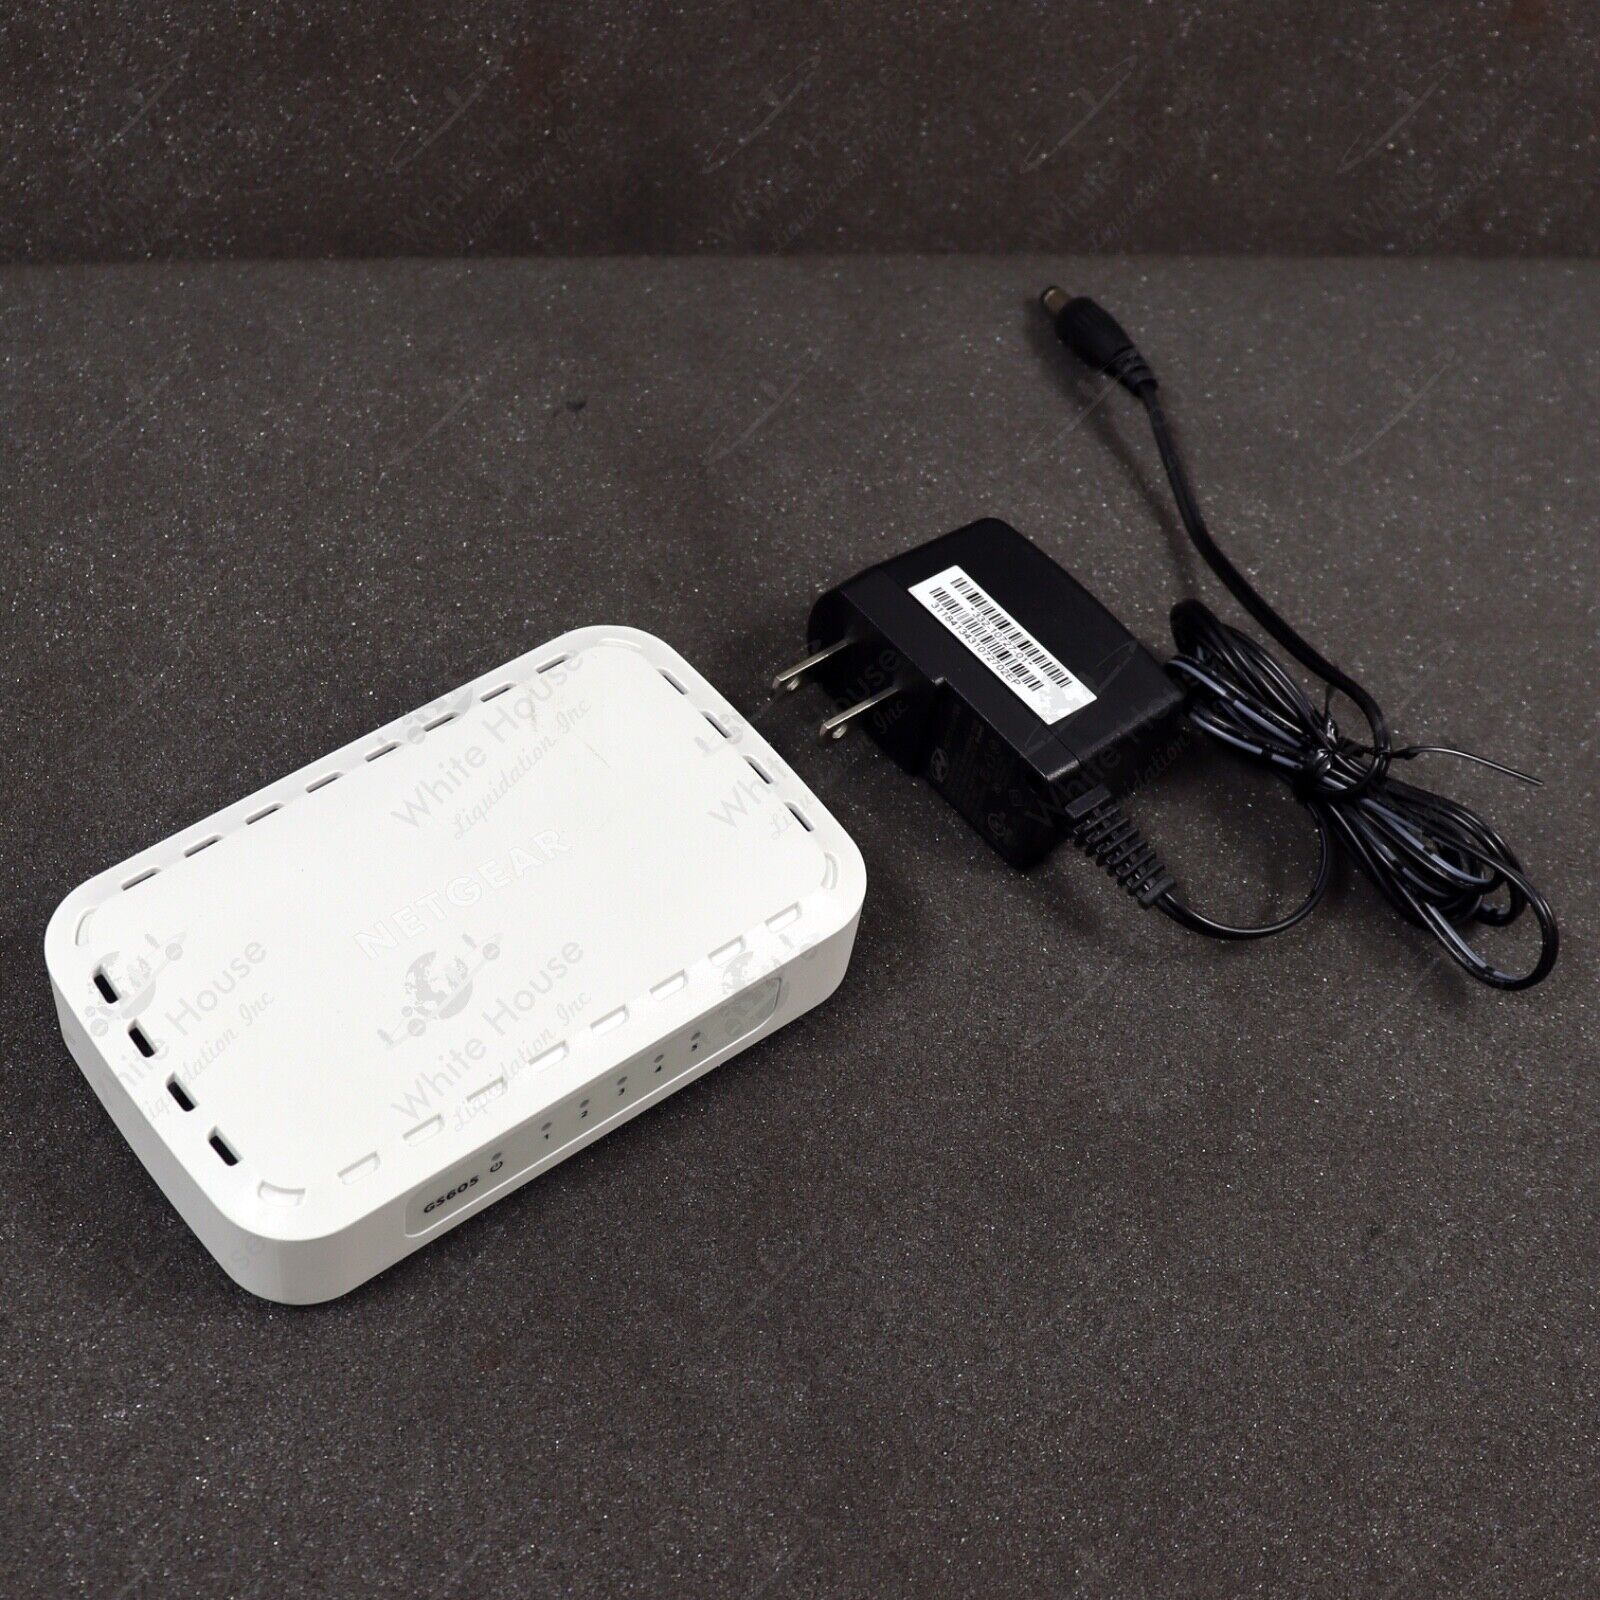 Netgear GS605v5 5 Port Gigabit Ethernet Switch With AC Power Adapter - White